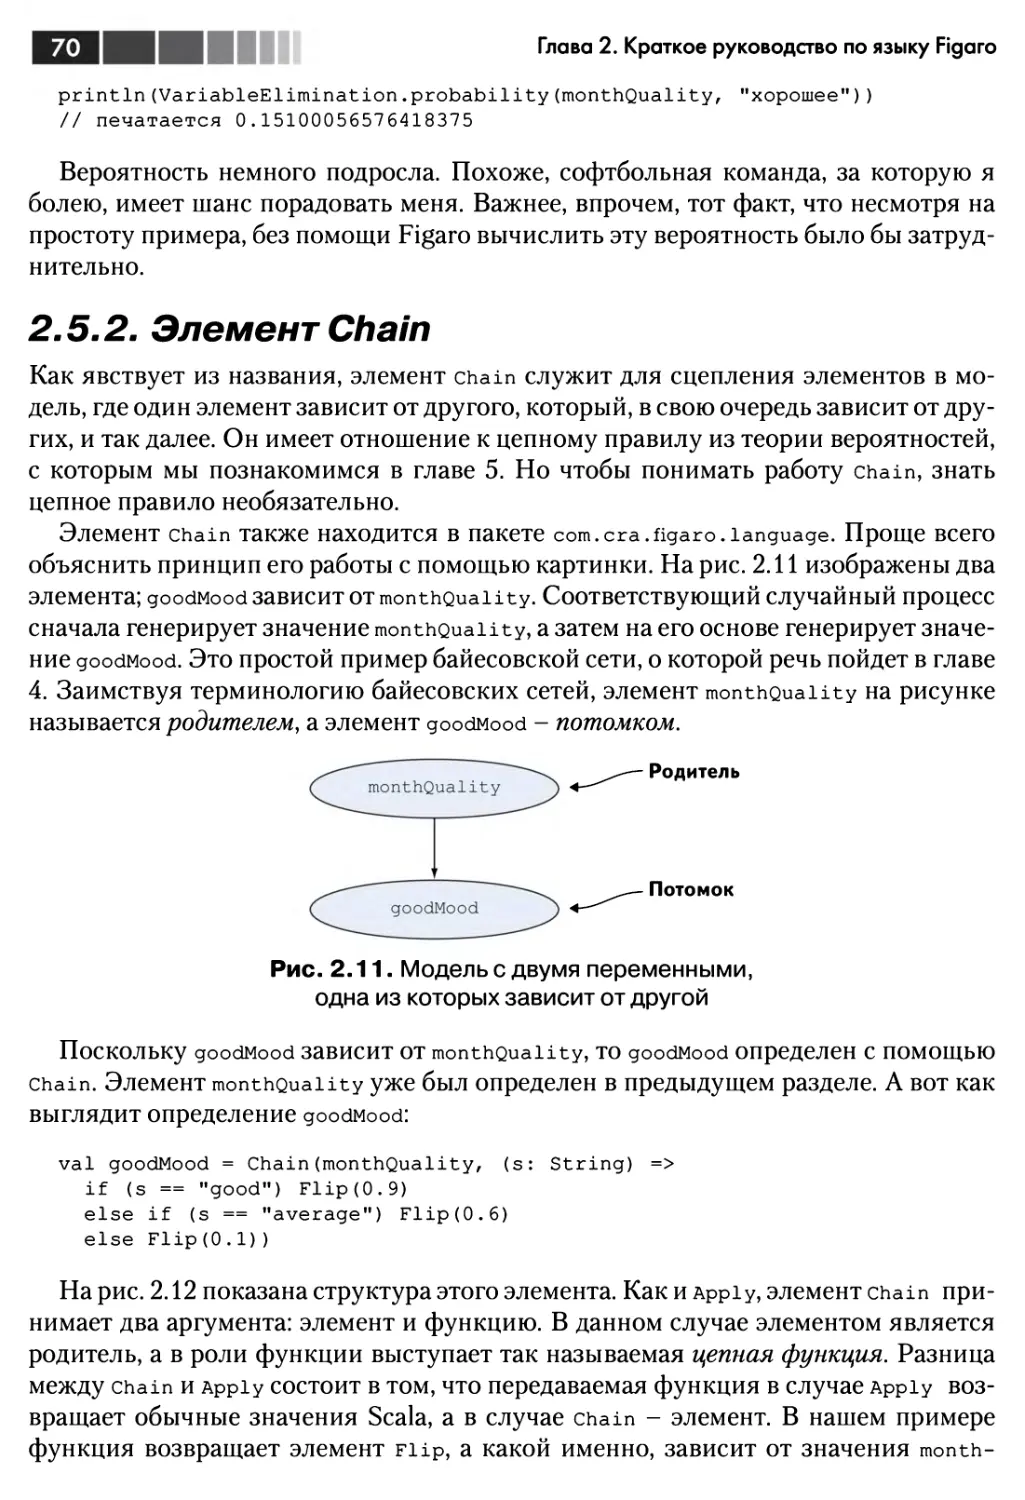 2.5.2. Элемент Chain